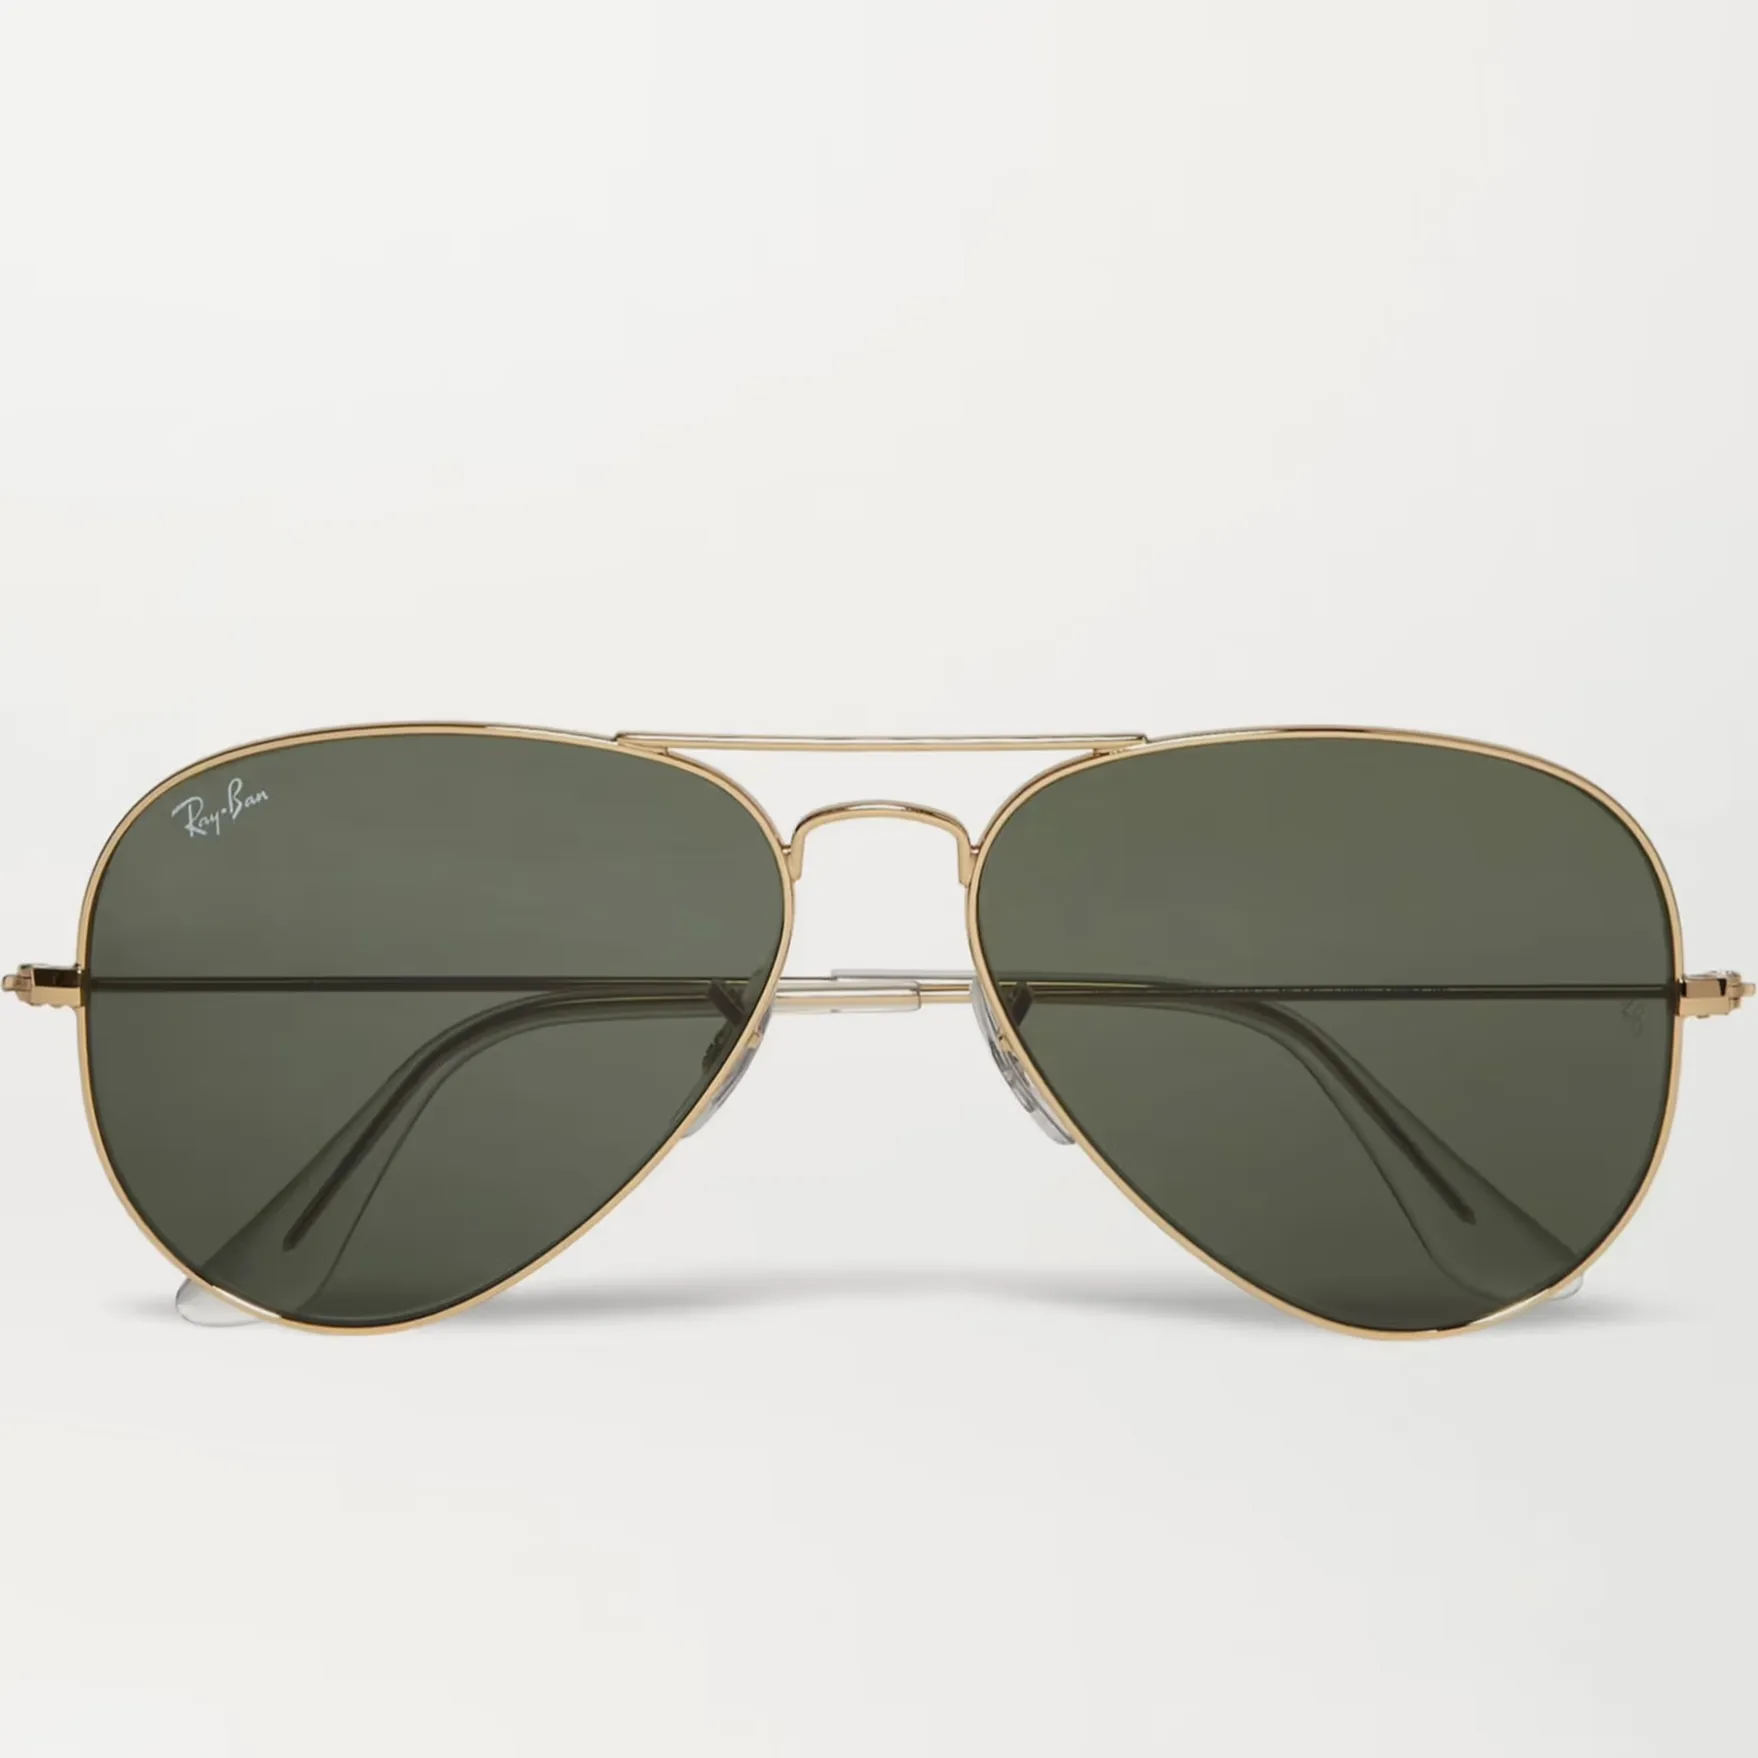 Free Ray-Ban Sunglasses Worth £127